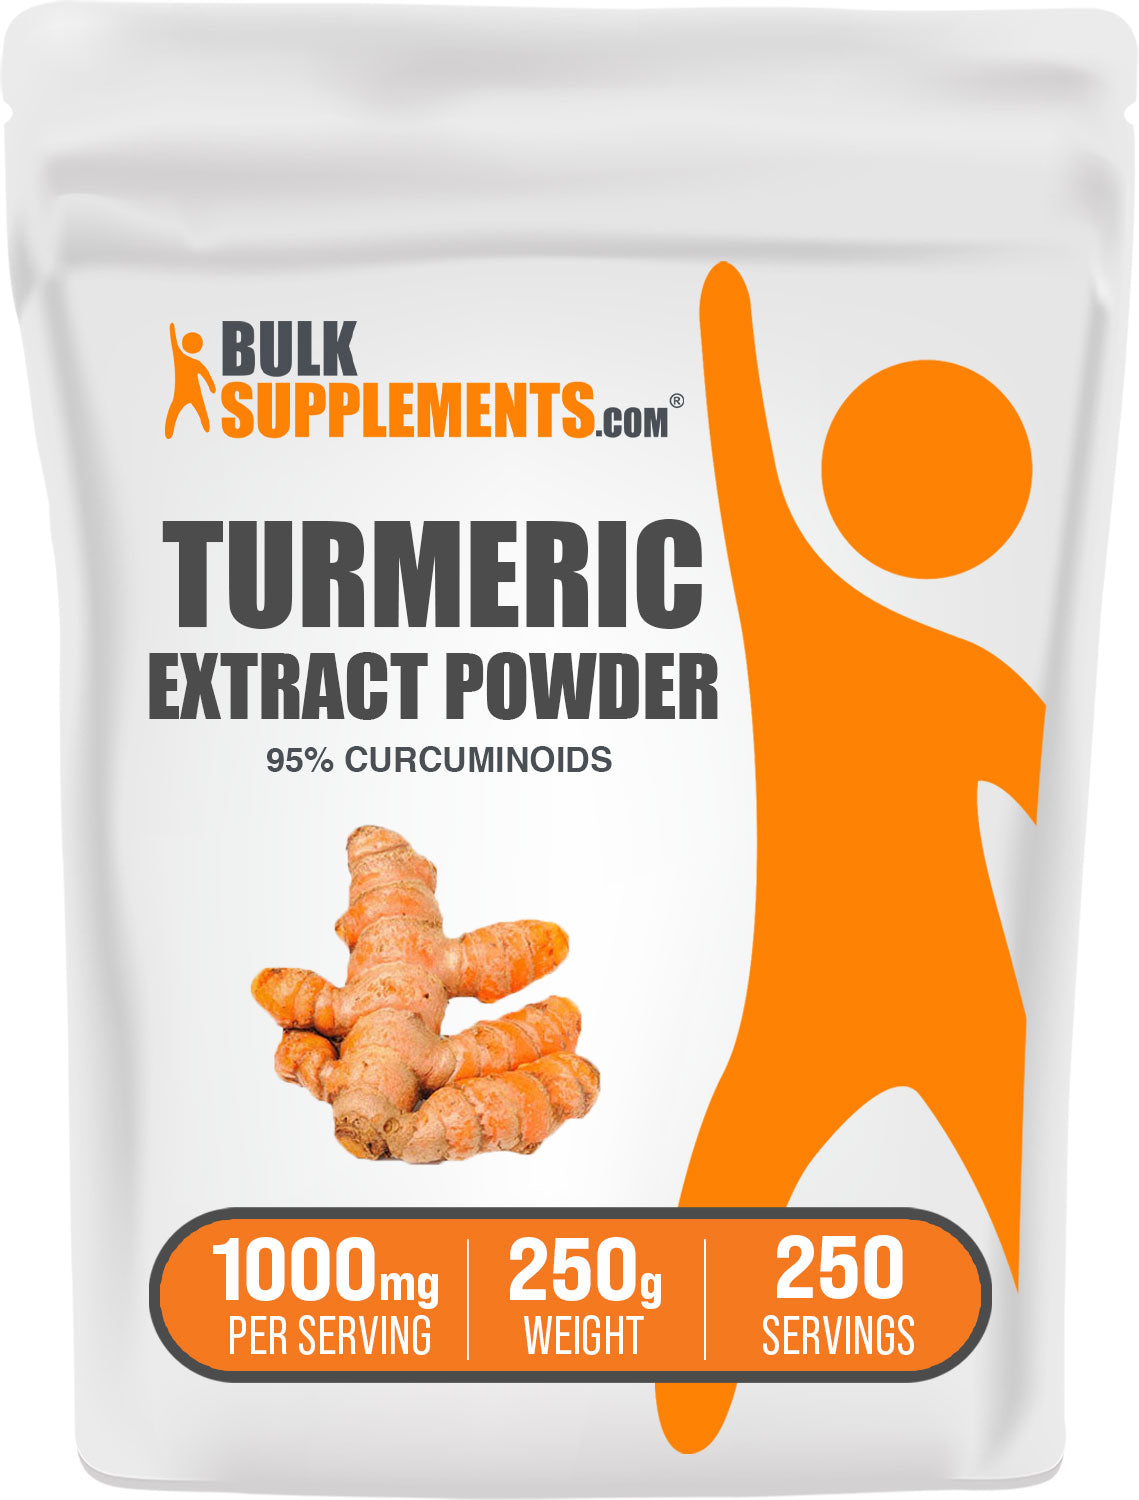 BulkSupplements Turmeric Extract Powder 95% Curcuminoids 250g bag